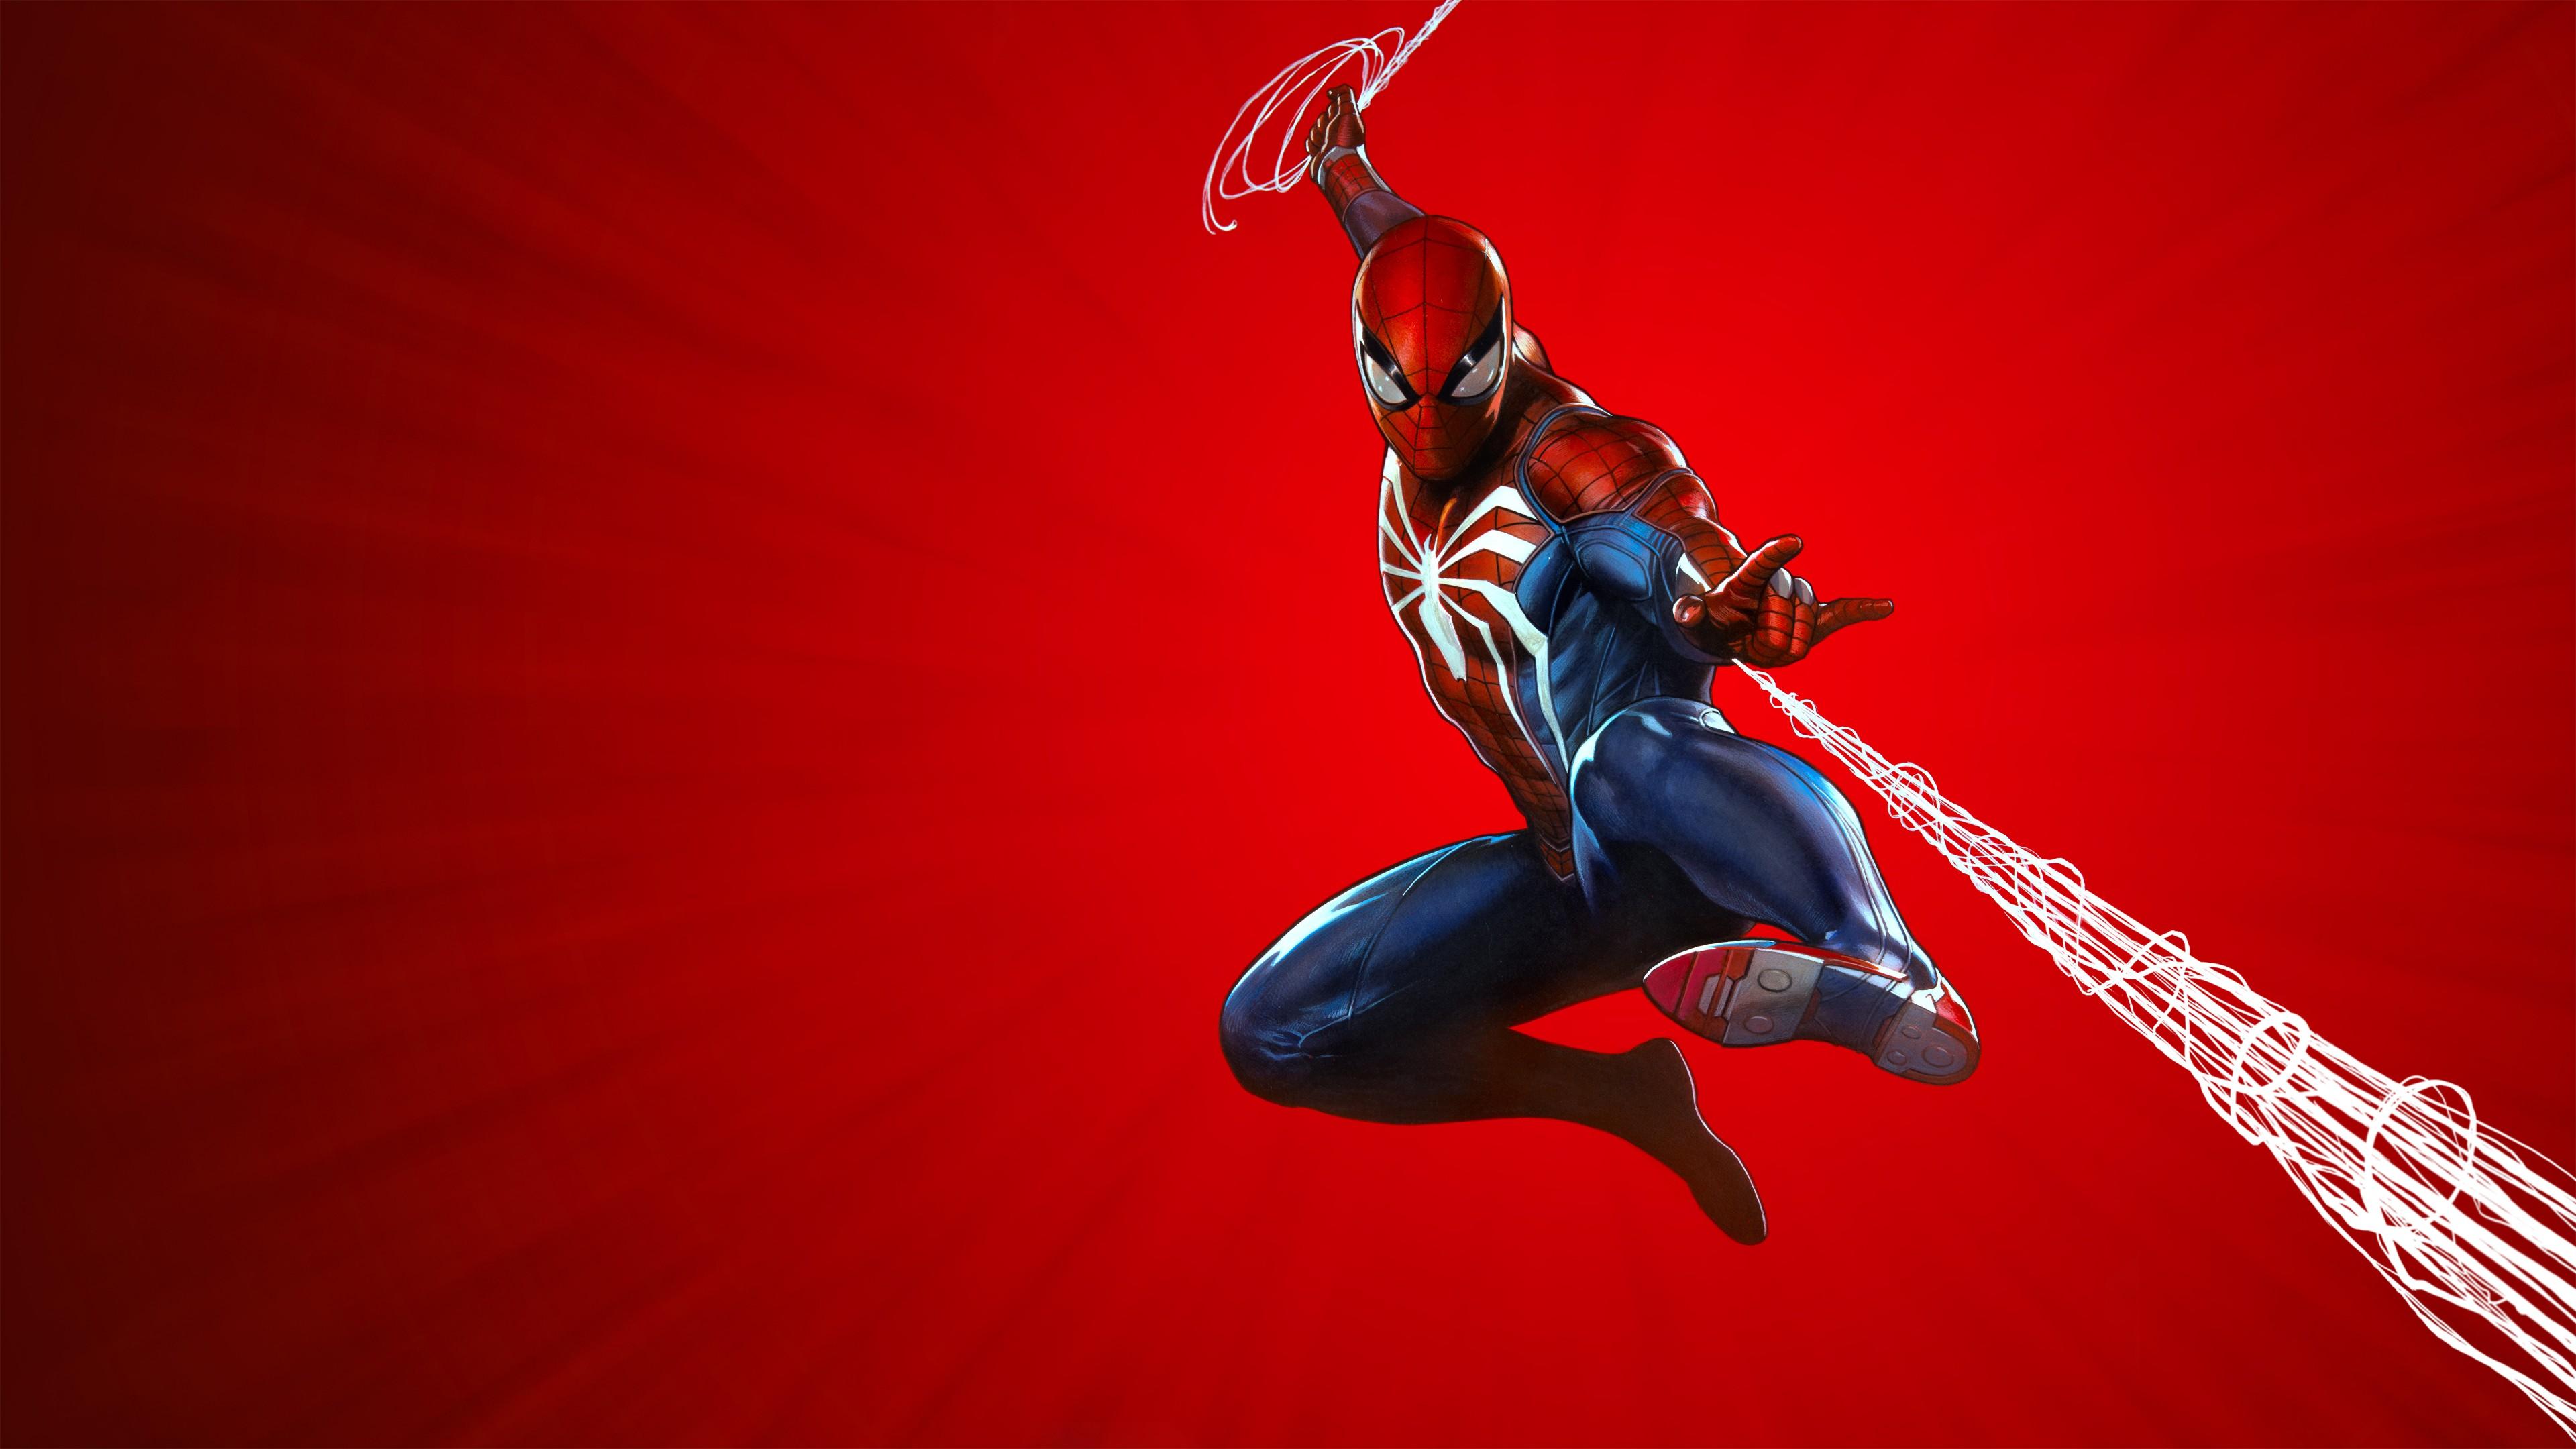 Spider Man PS4 Game Cover Background for Desktop